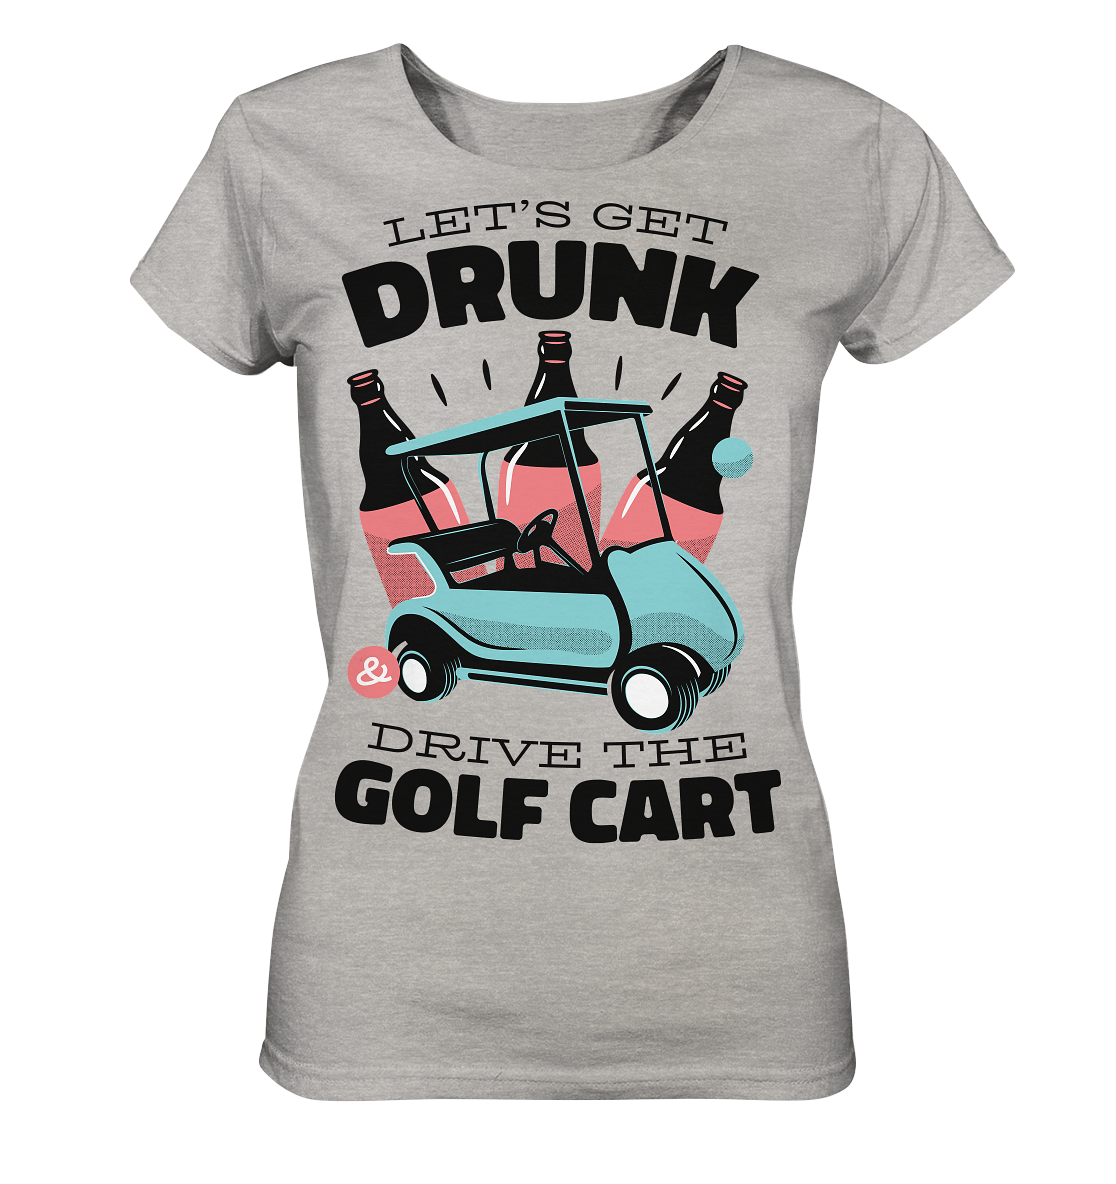 Let's get drunk drive the golf cart - Ladies Organic Shirt (mottled)